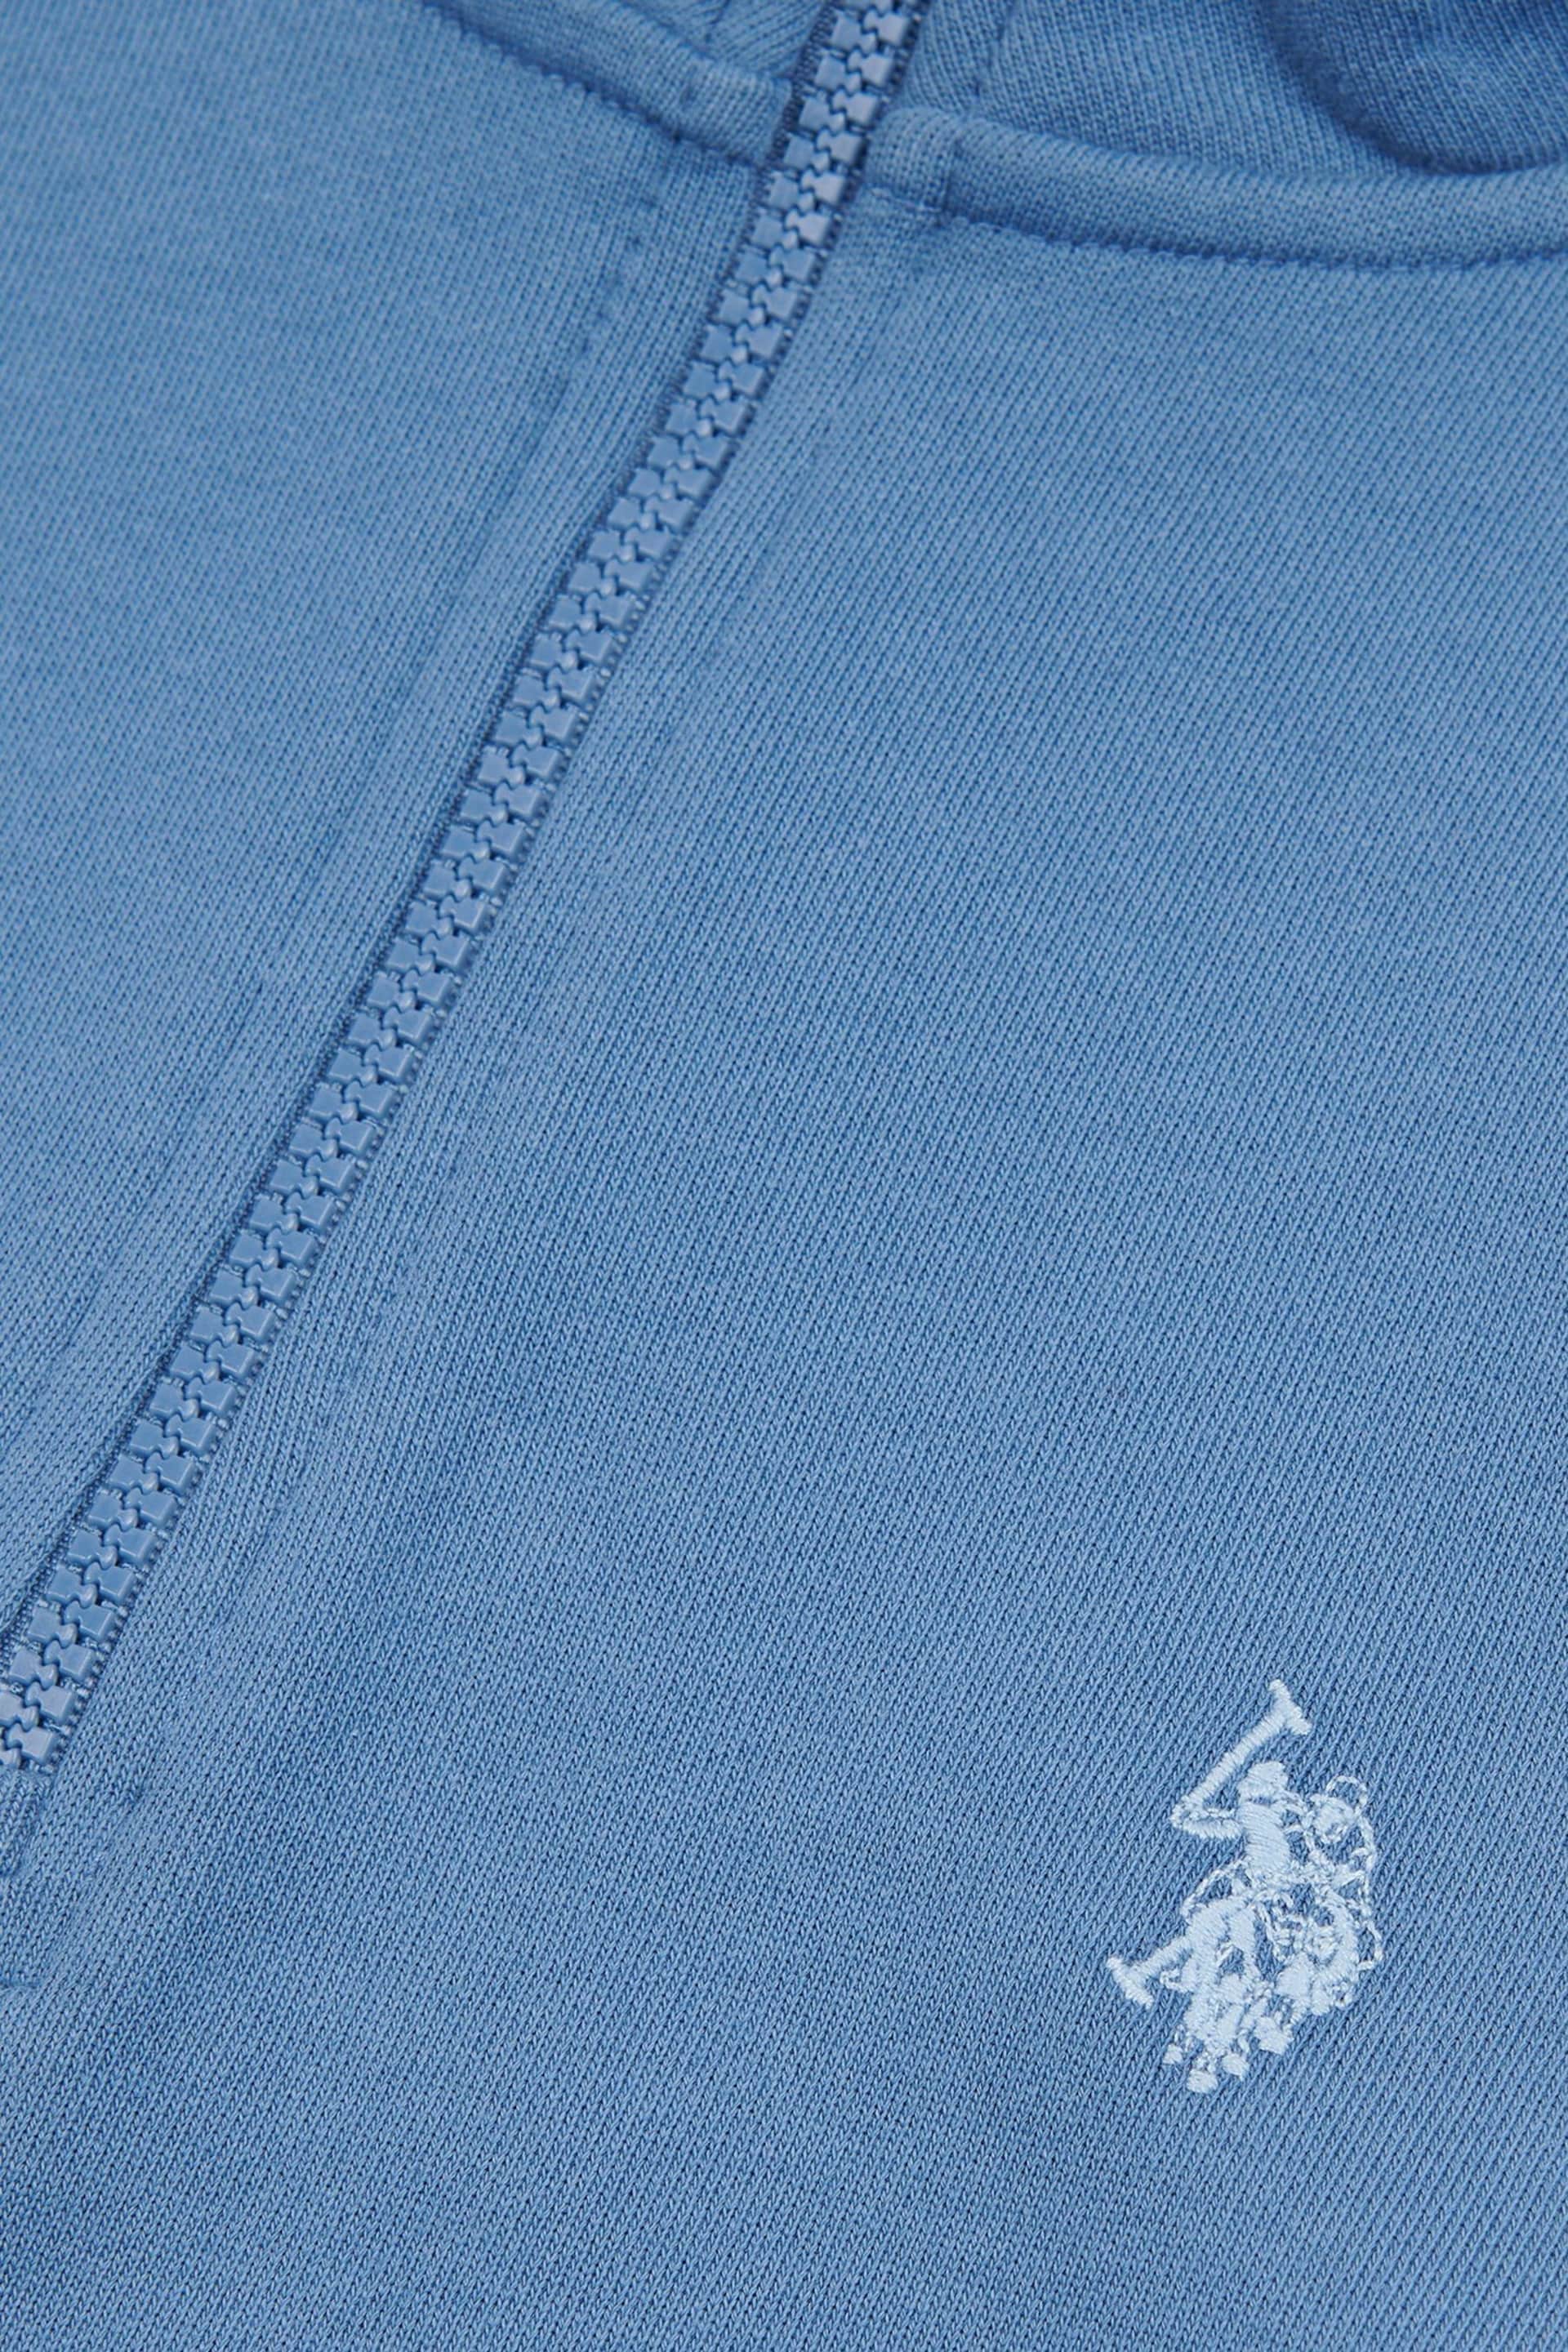 U.S. Polo Assn. Mens Classic Fit 1/4 Zip Sweatshirt - Image 8 of 8